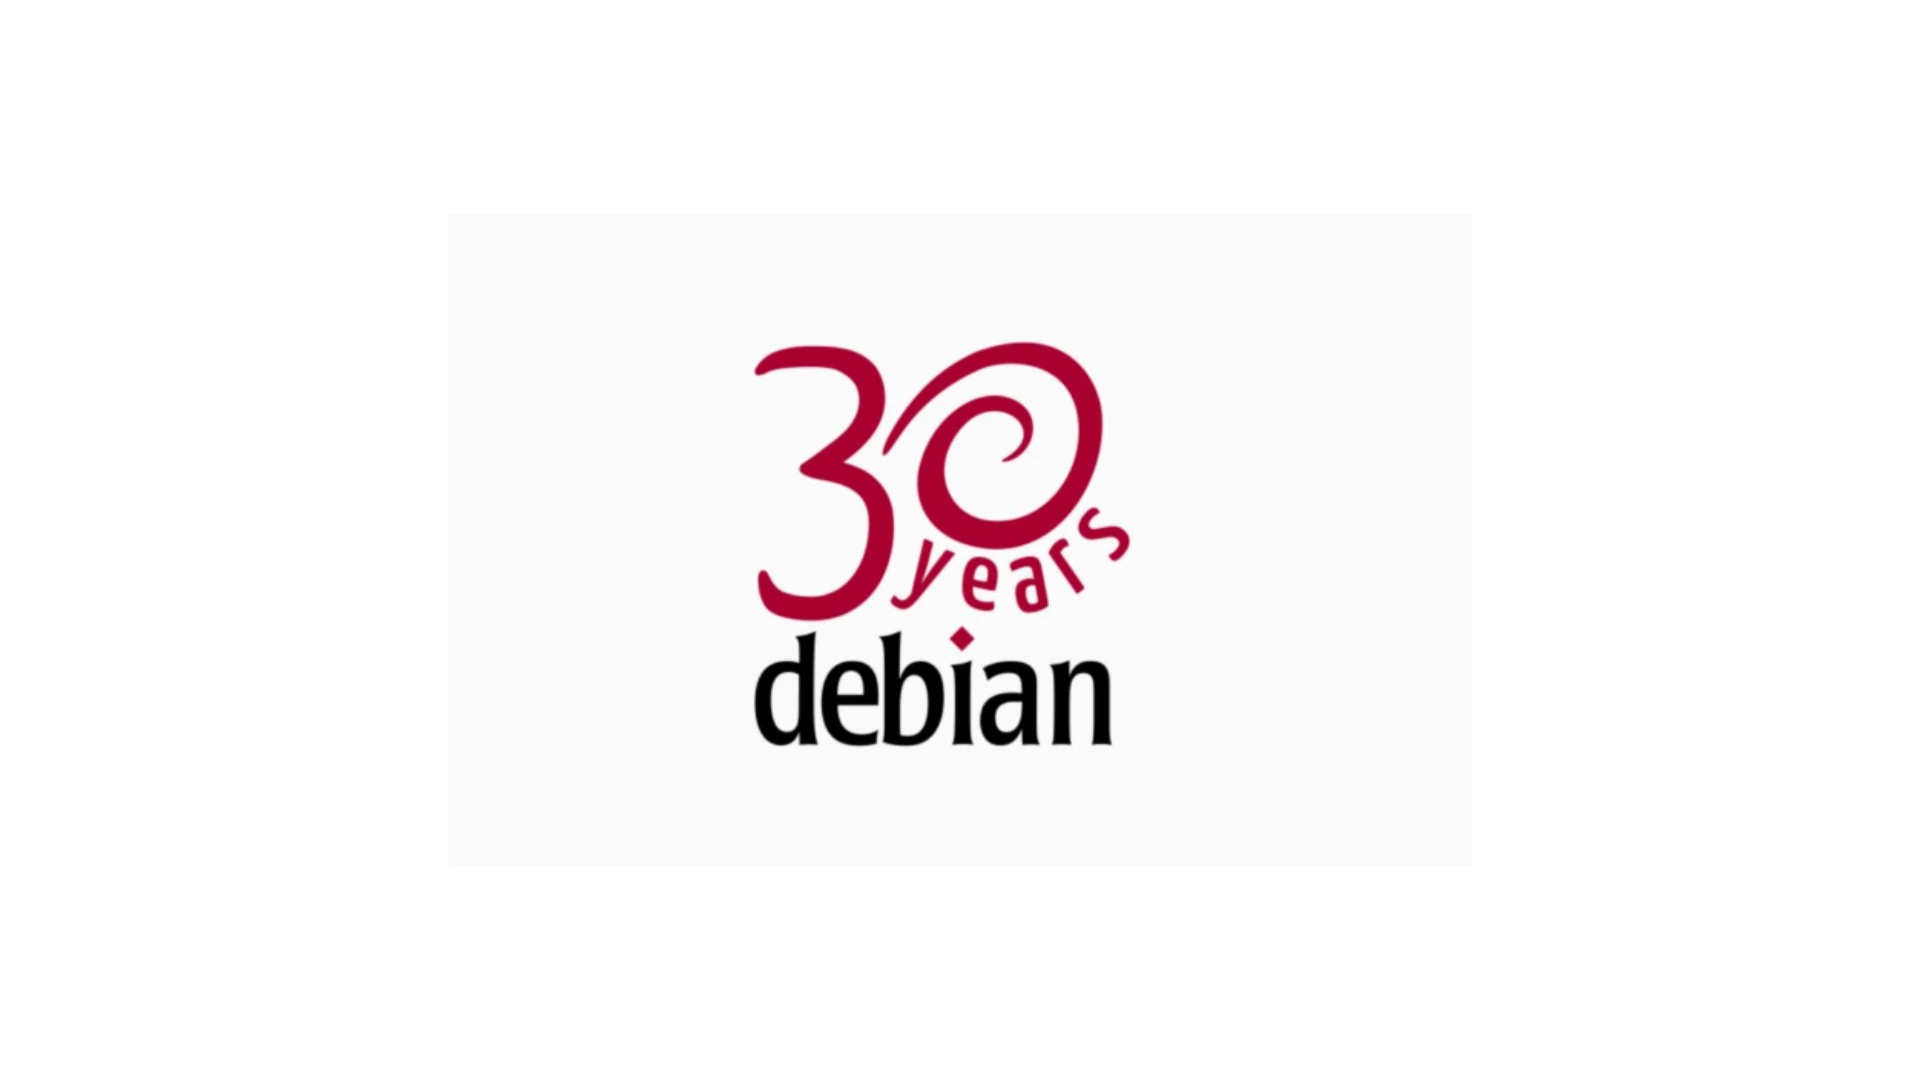 Debian Turns 30 Years Old, Happy Birthday!